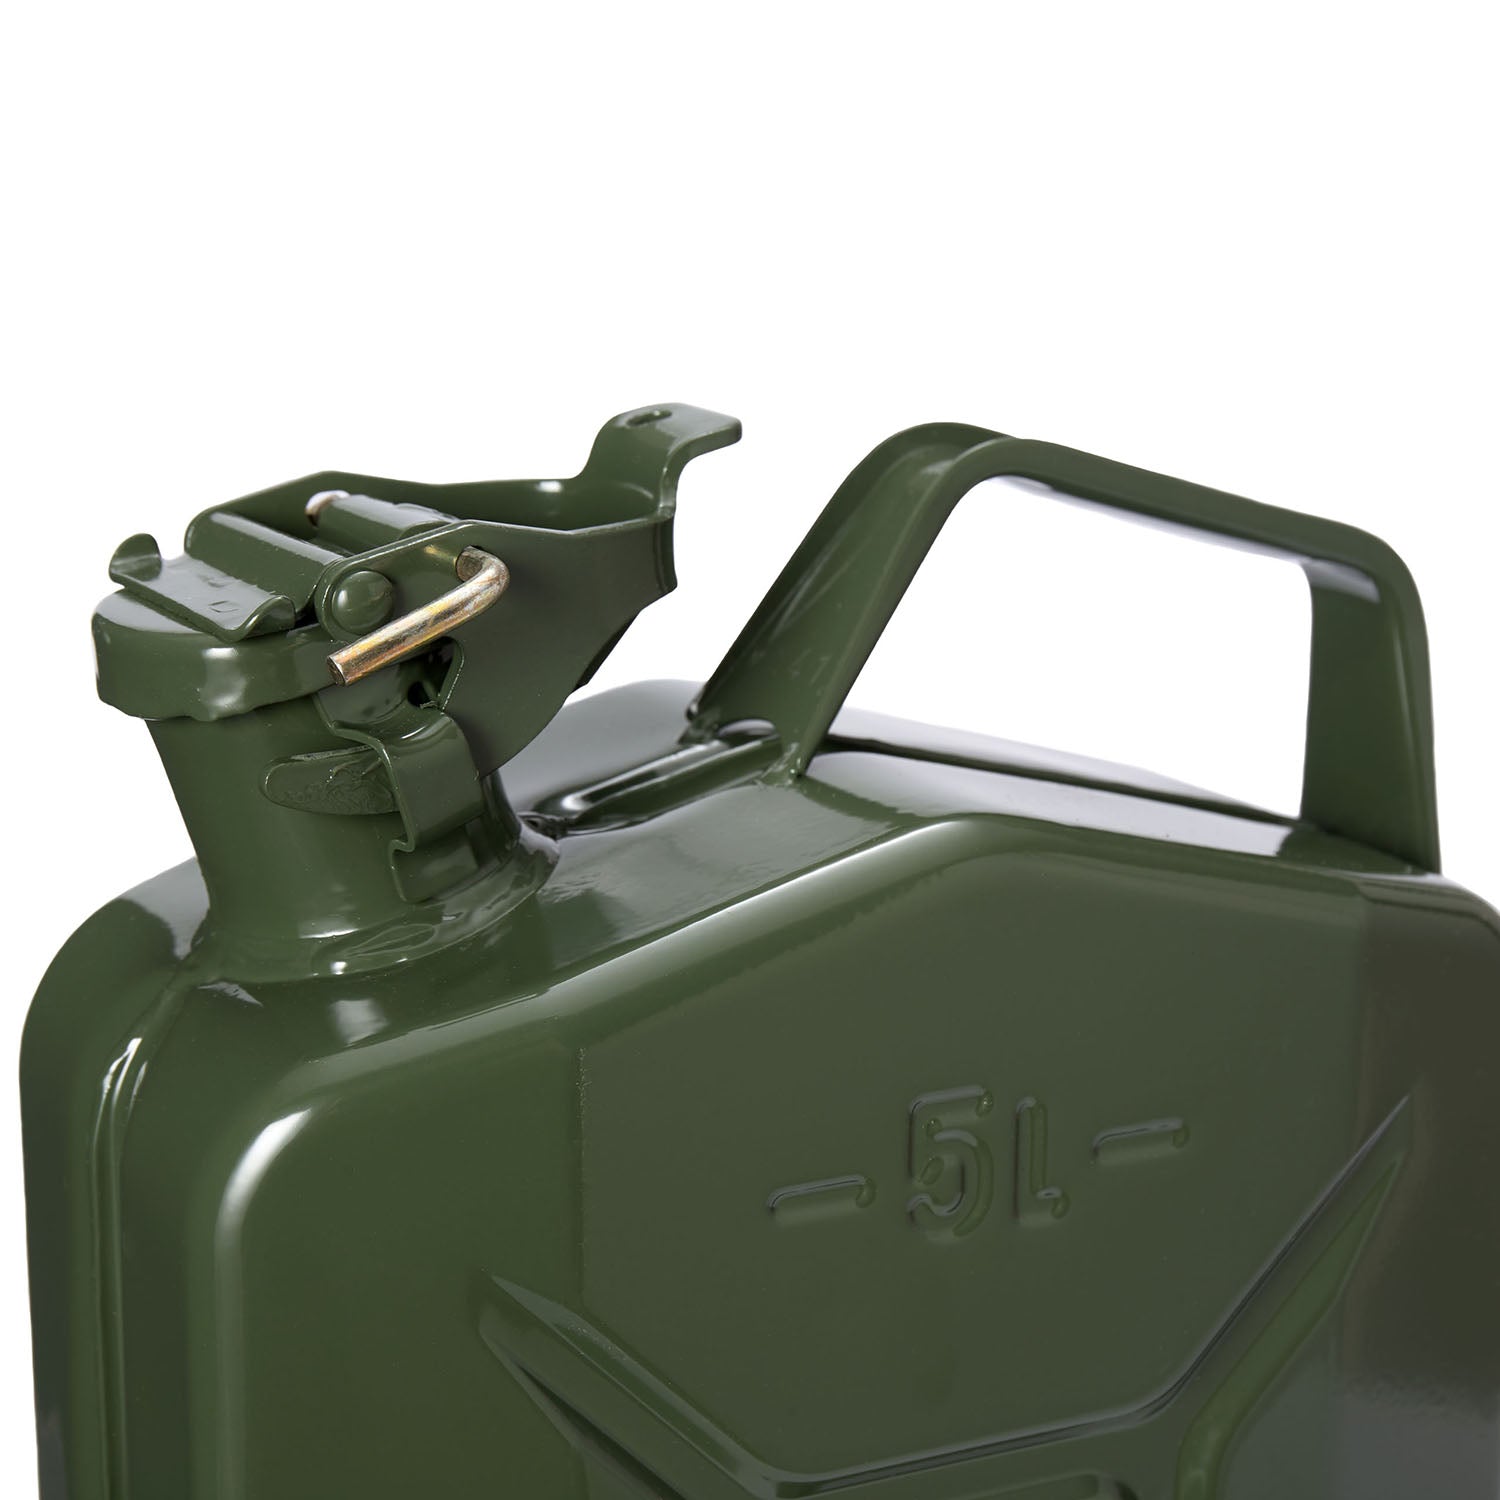 Metall Benzinkanister Kraftstoffkanister olivgrün 5 Liter + Ausgießer silber/grün